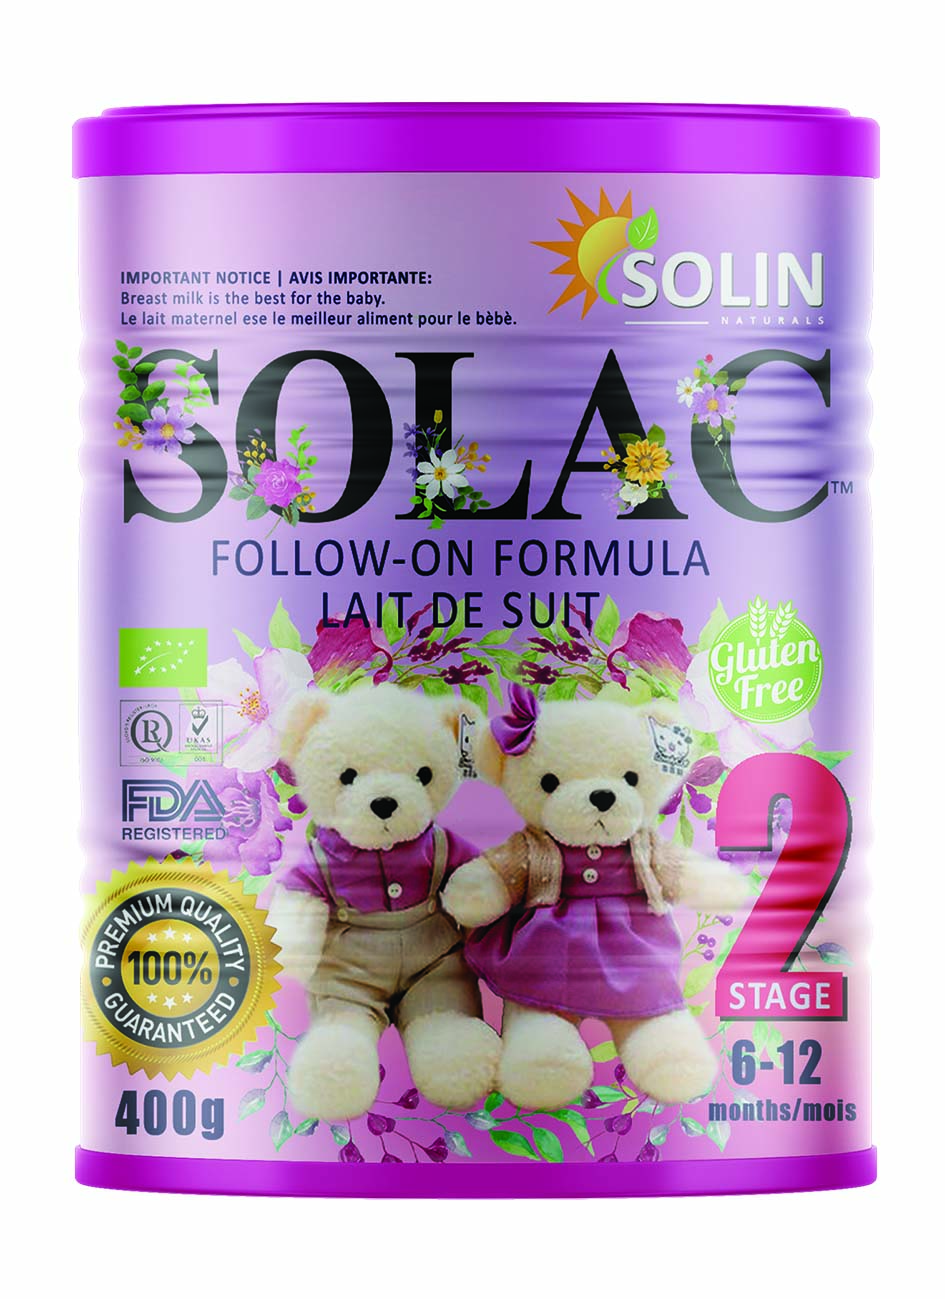 SOLAC INFANT FORMULA - STAGE 2 (6-12 months) x 24